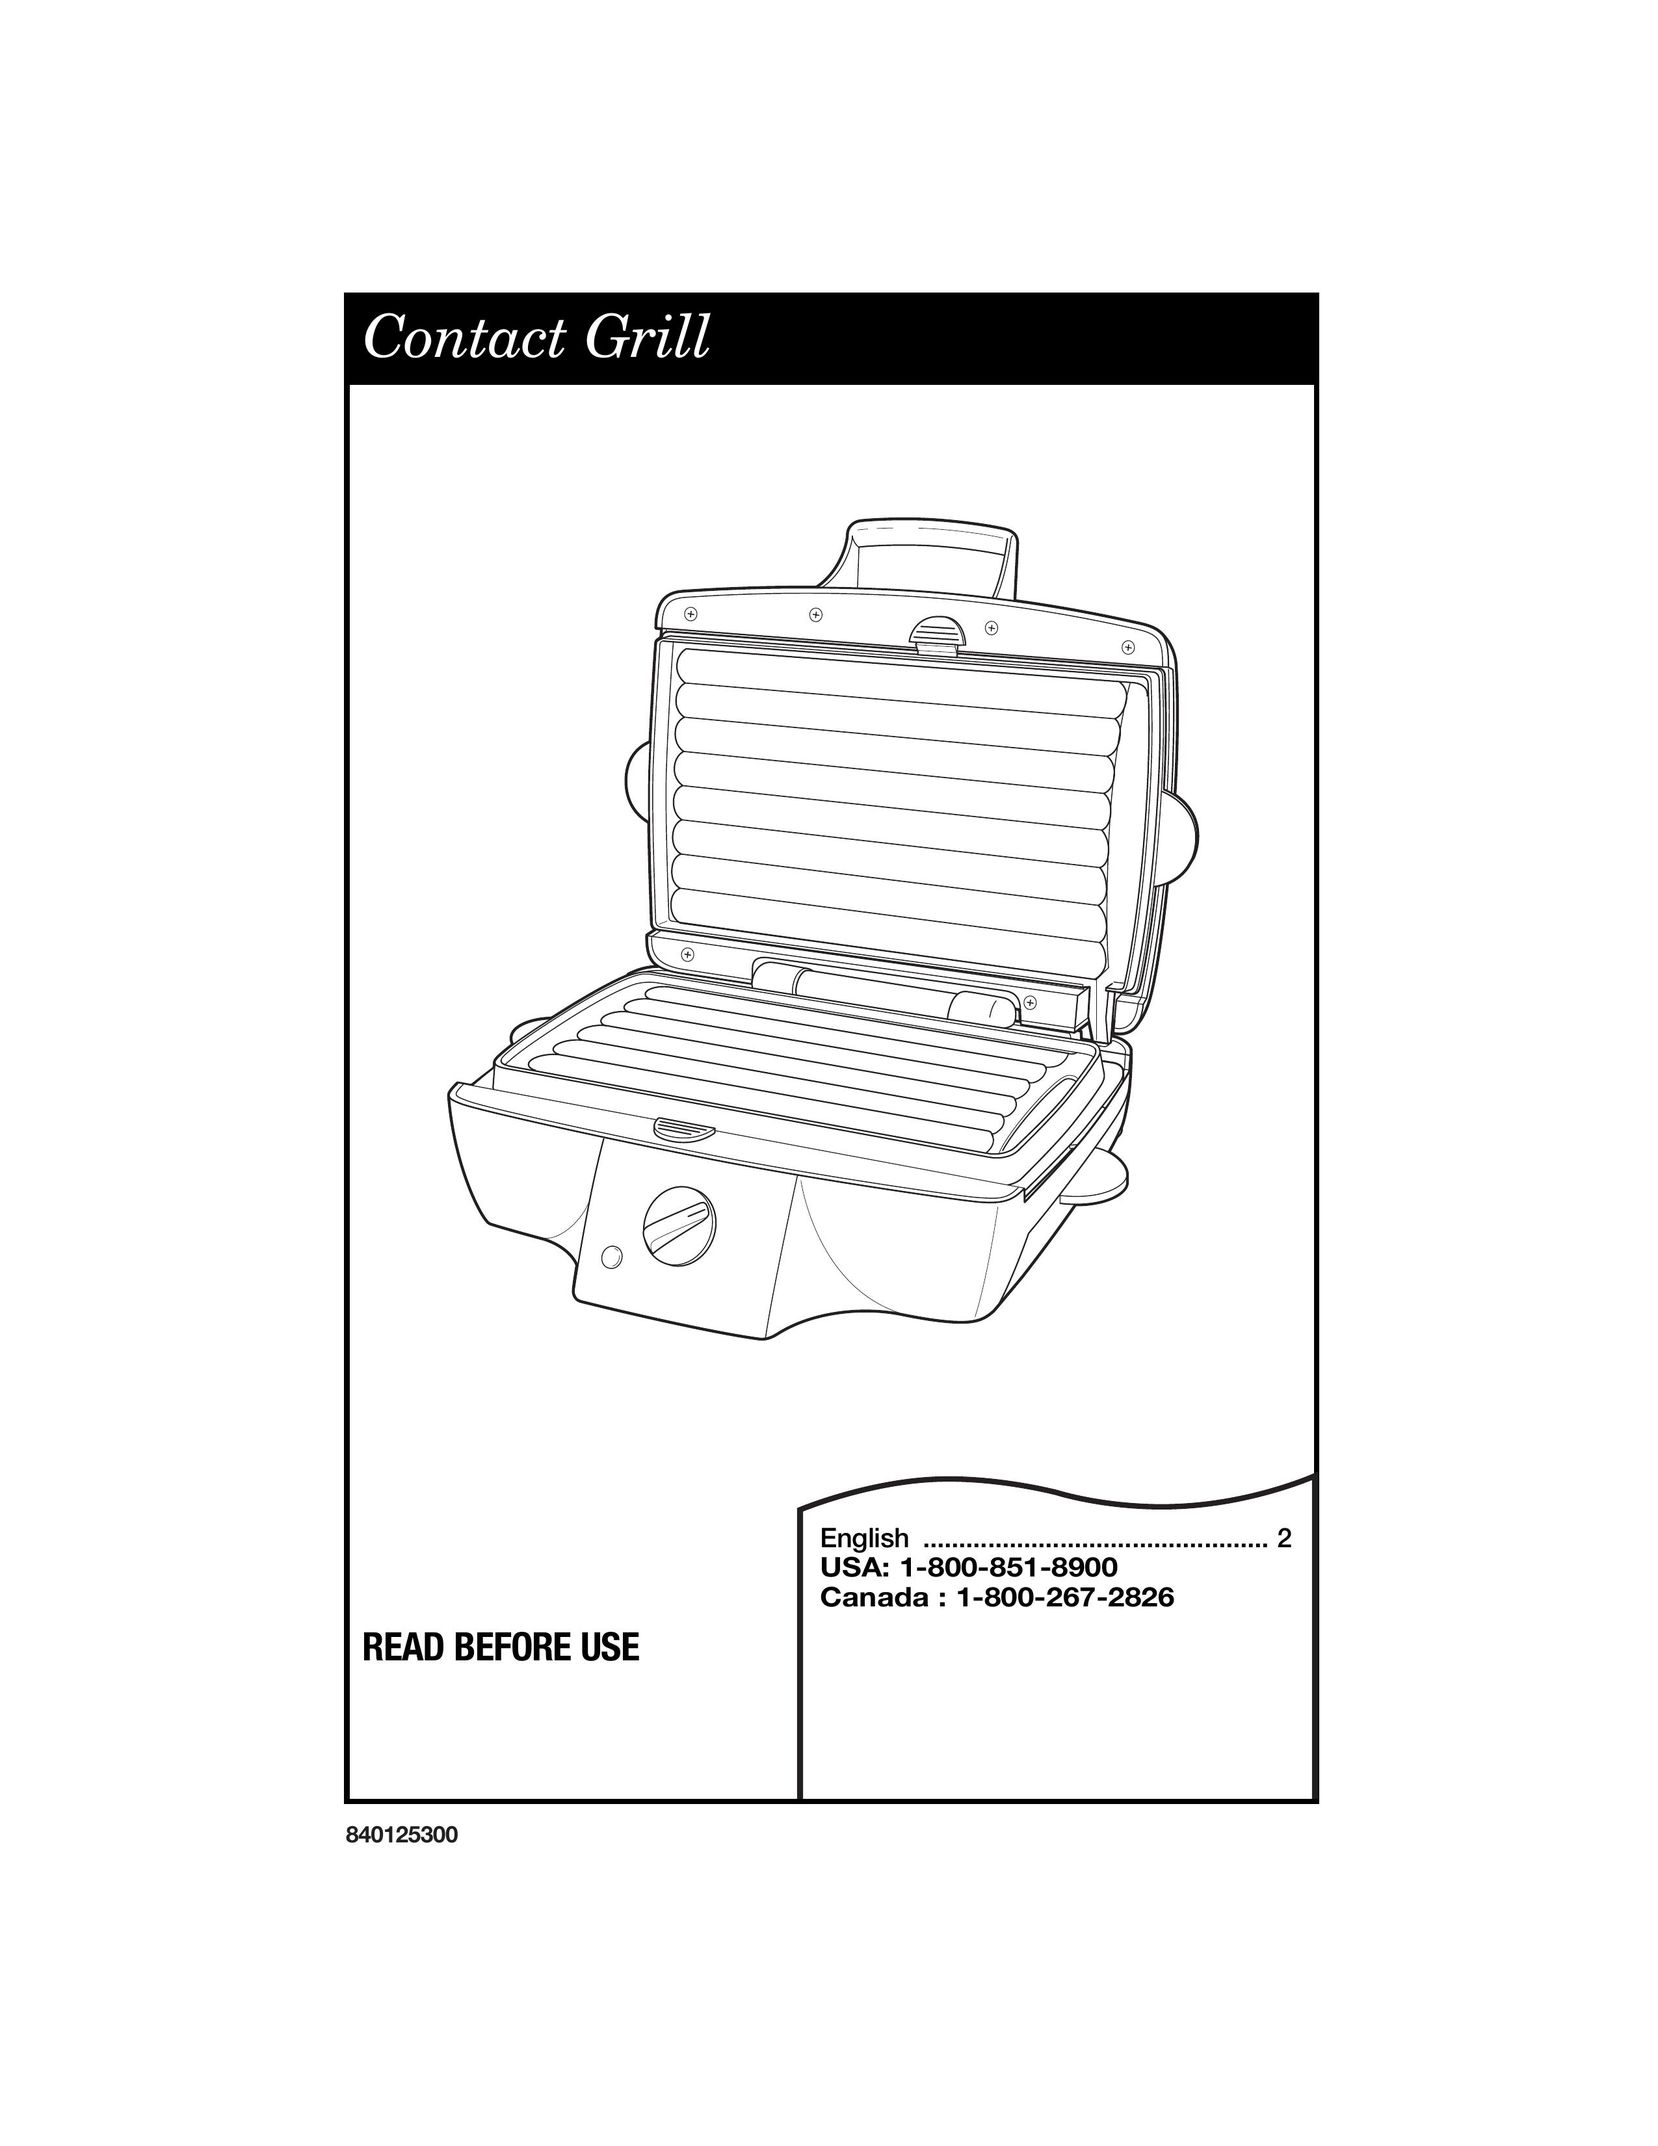 Hamilton Beach 840125300 Kitchen Grill User Manual